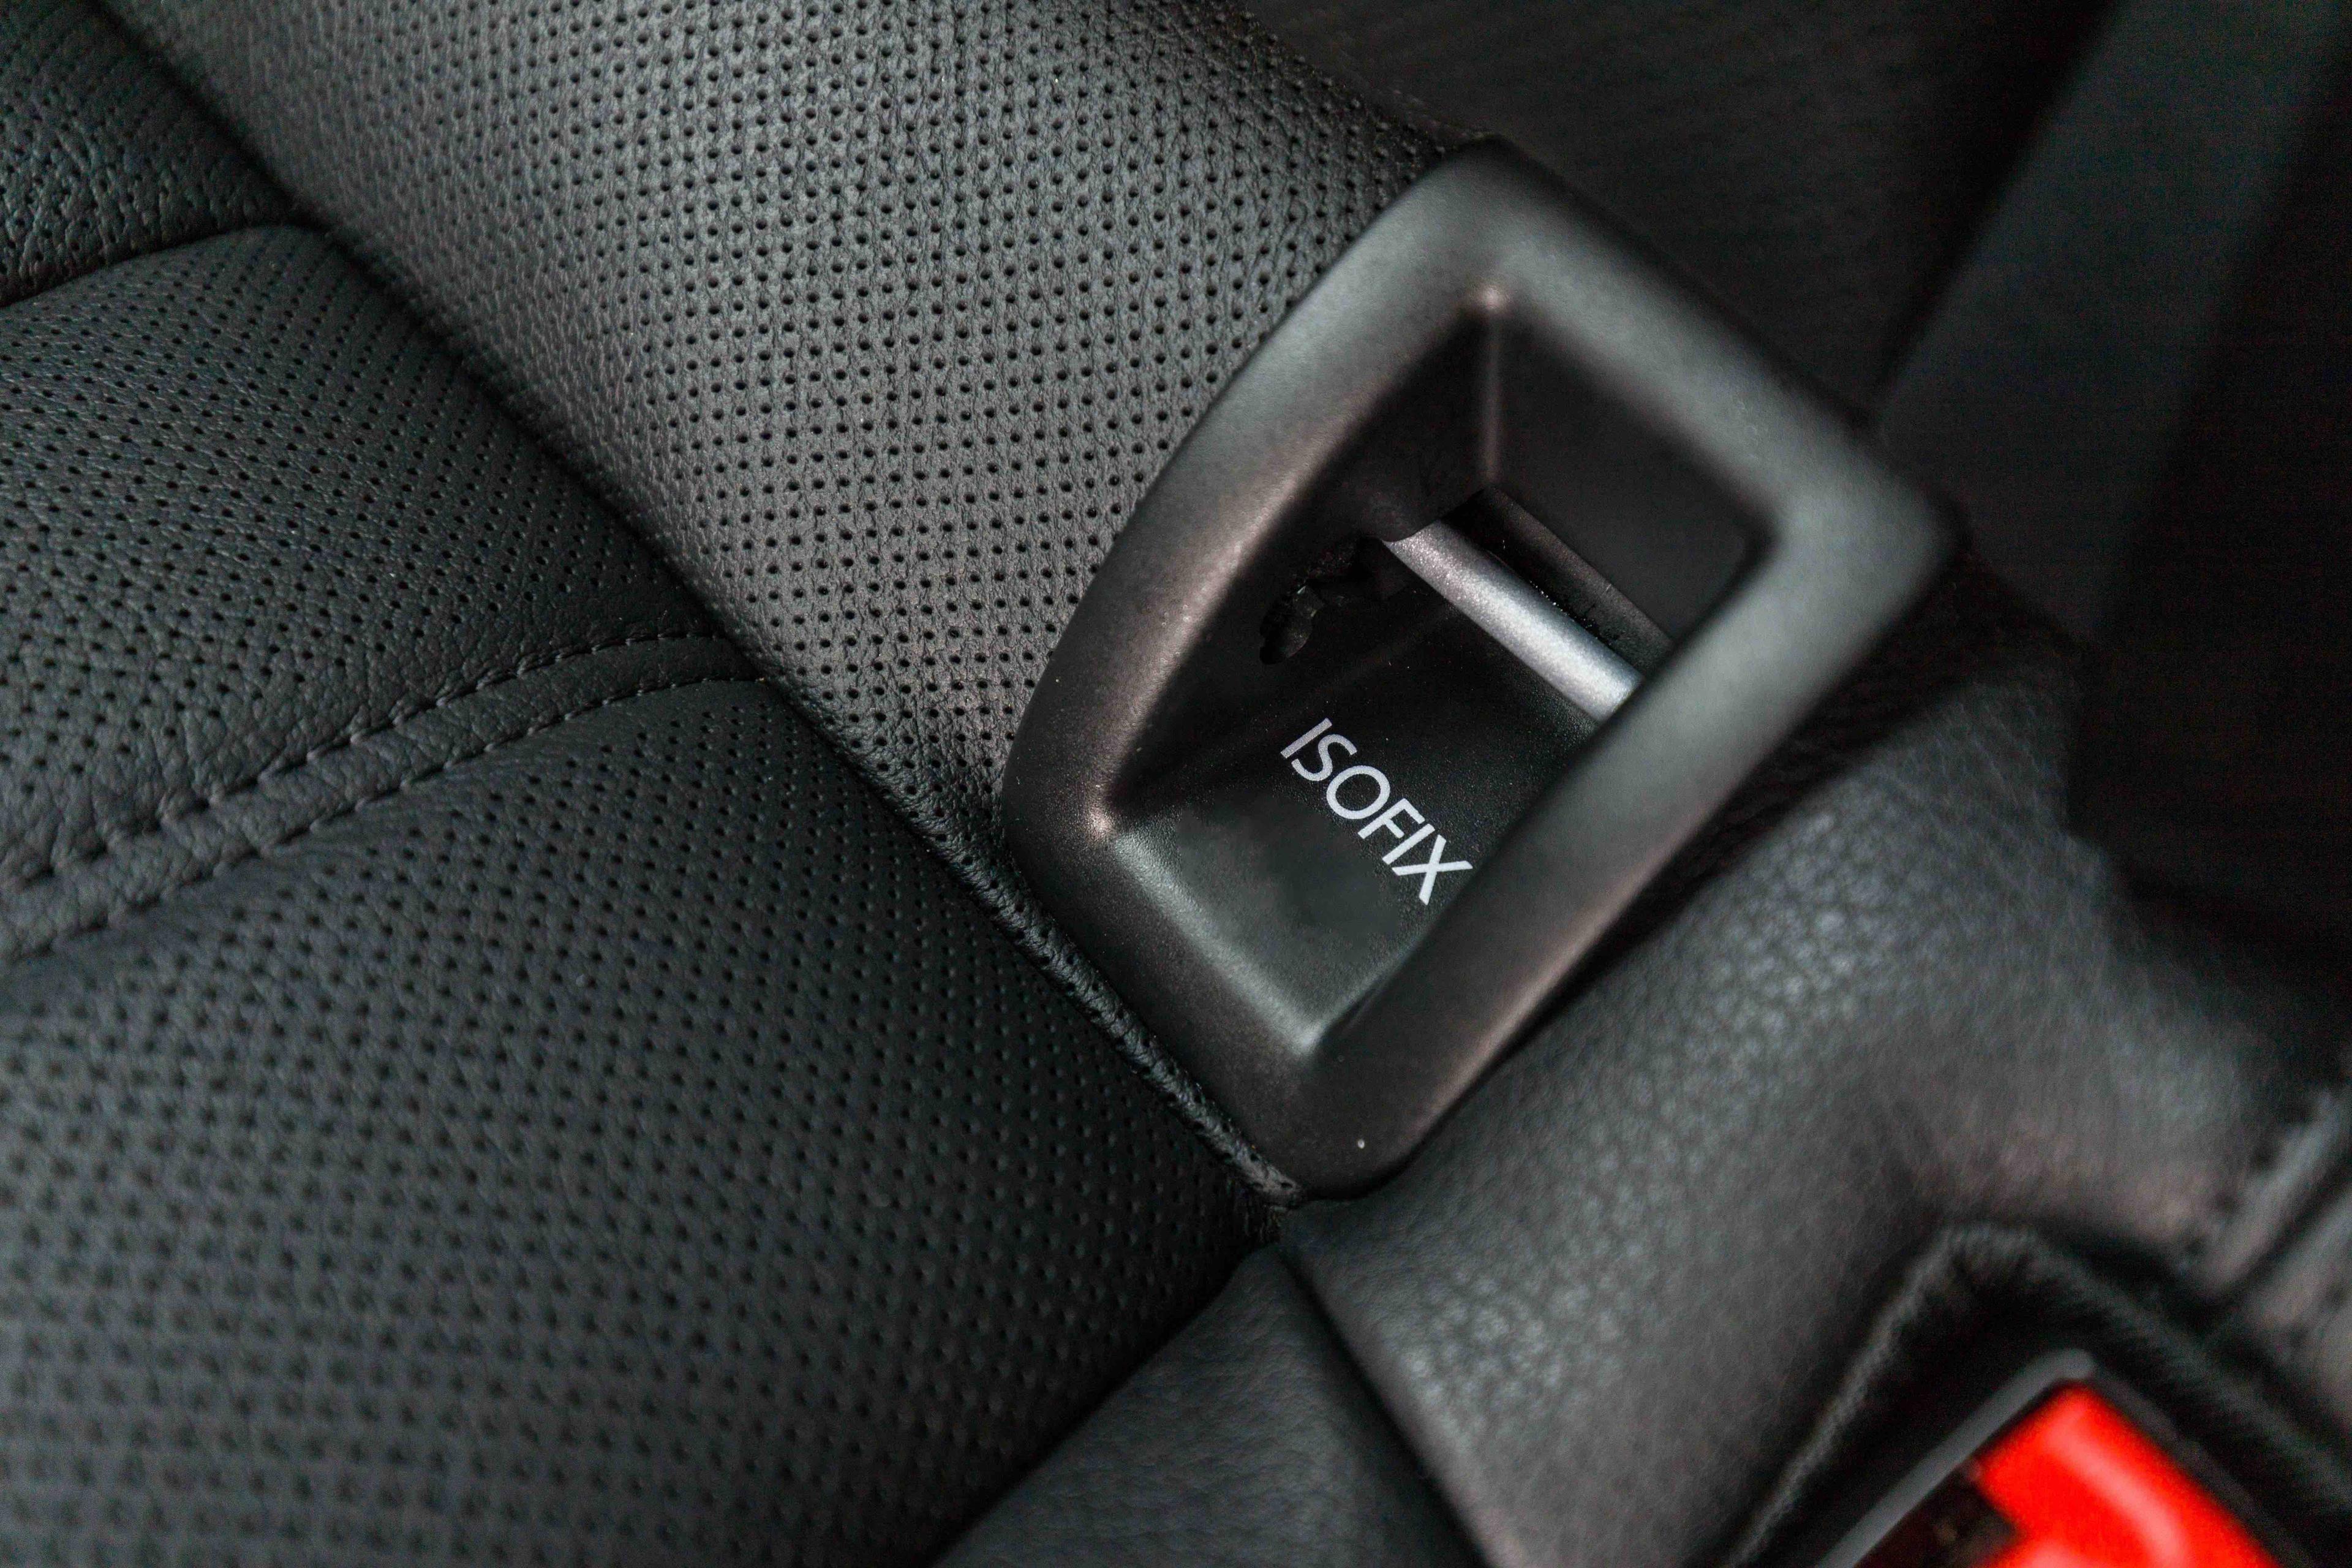 An ISOFIX car seat anchor point